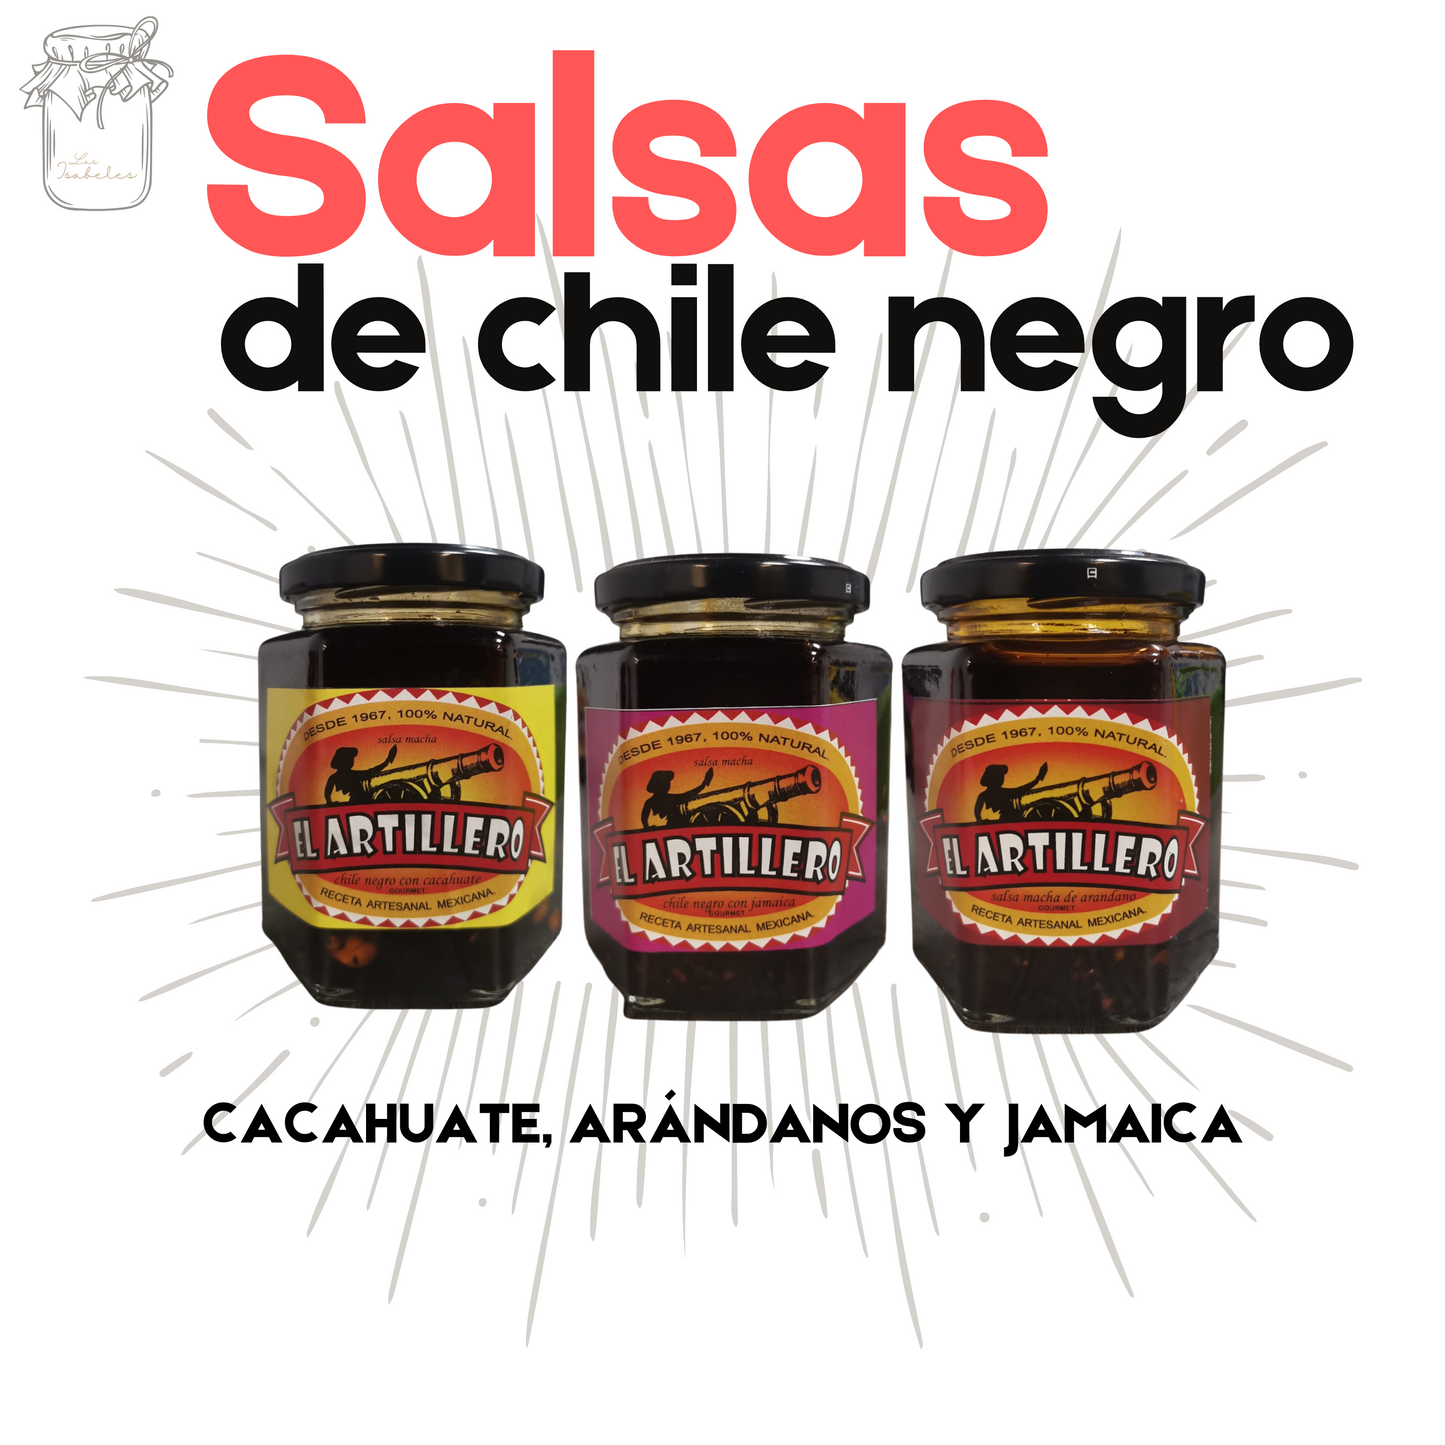 Salsas de chile negro | Cacahuate | Jamaica | Arándanos | Artesanal | Salsas Tradicionales | Mexpofood